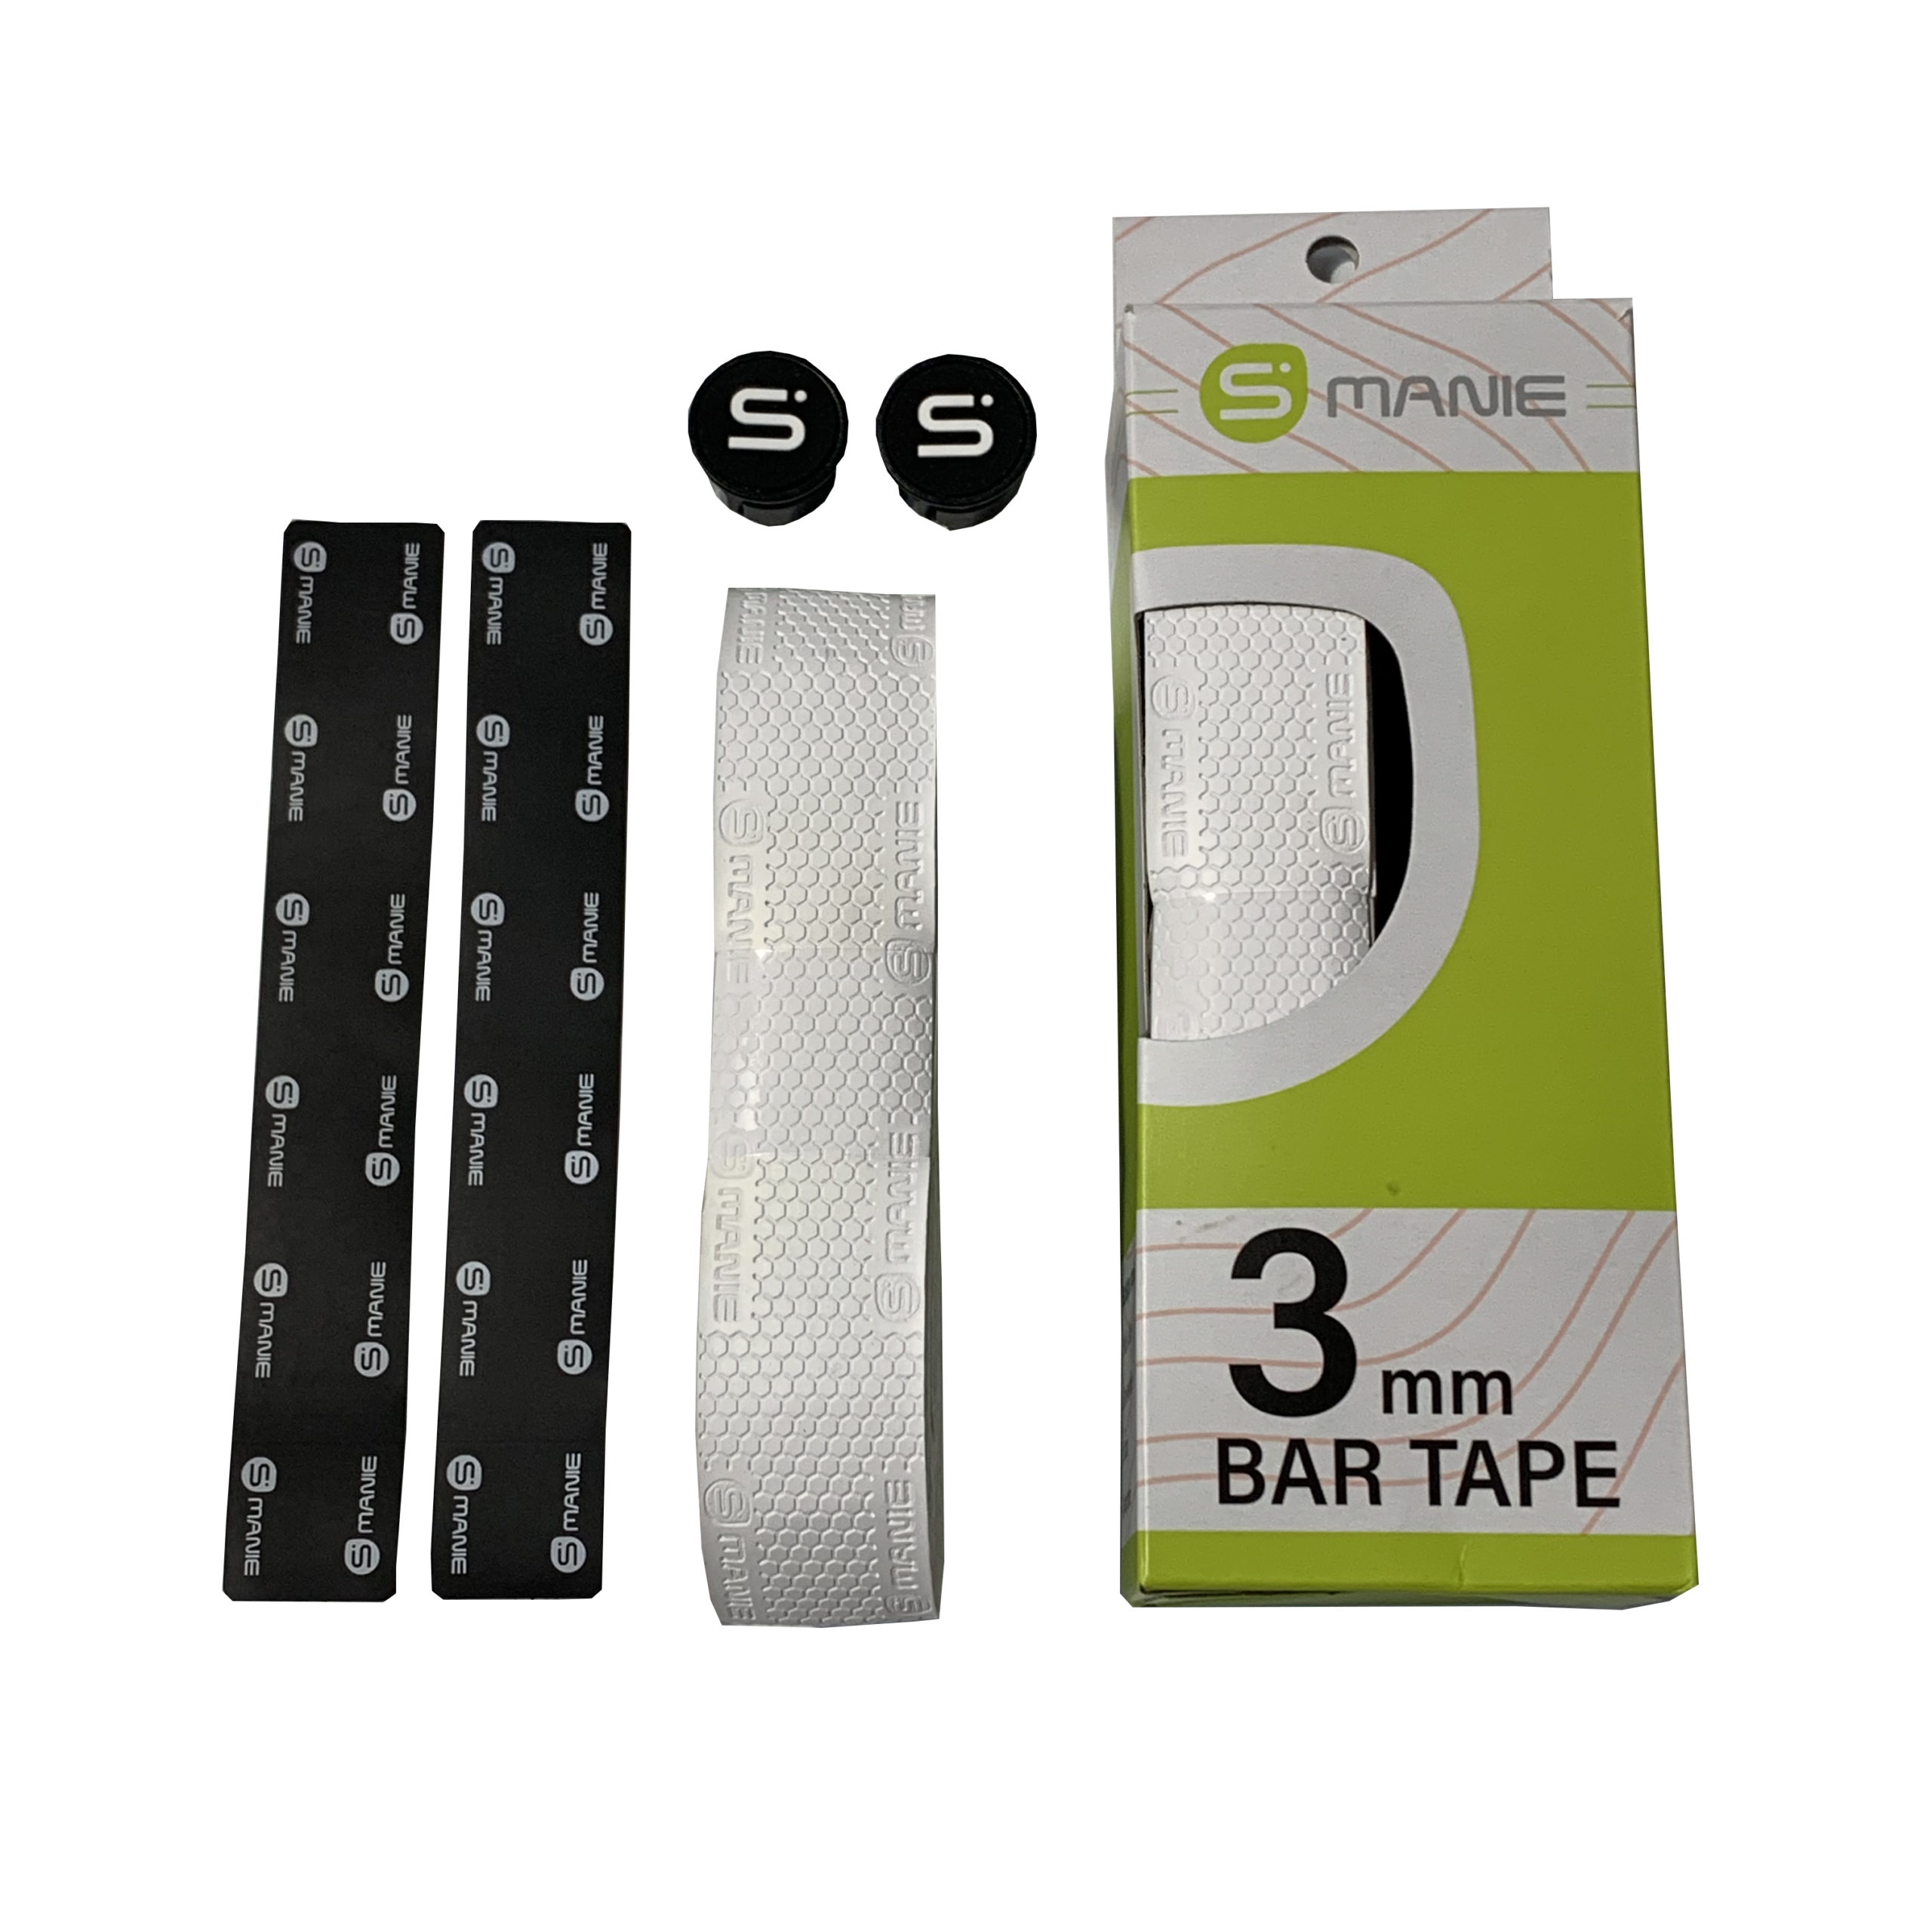 Smanie-Bar-Tape-White-1-scaled